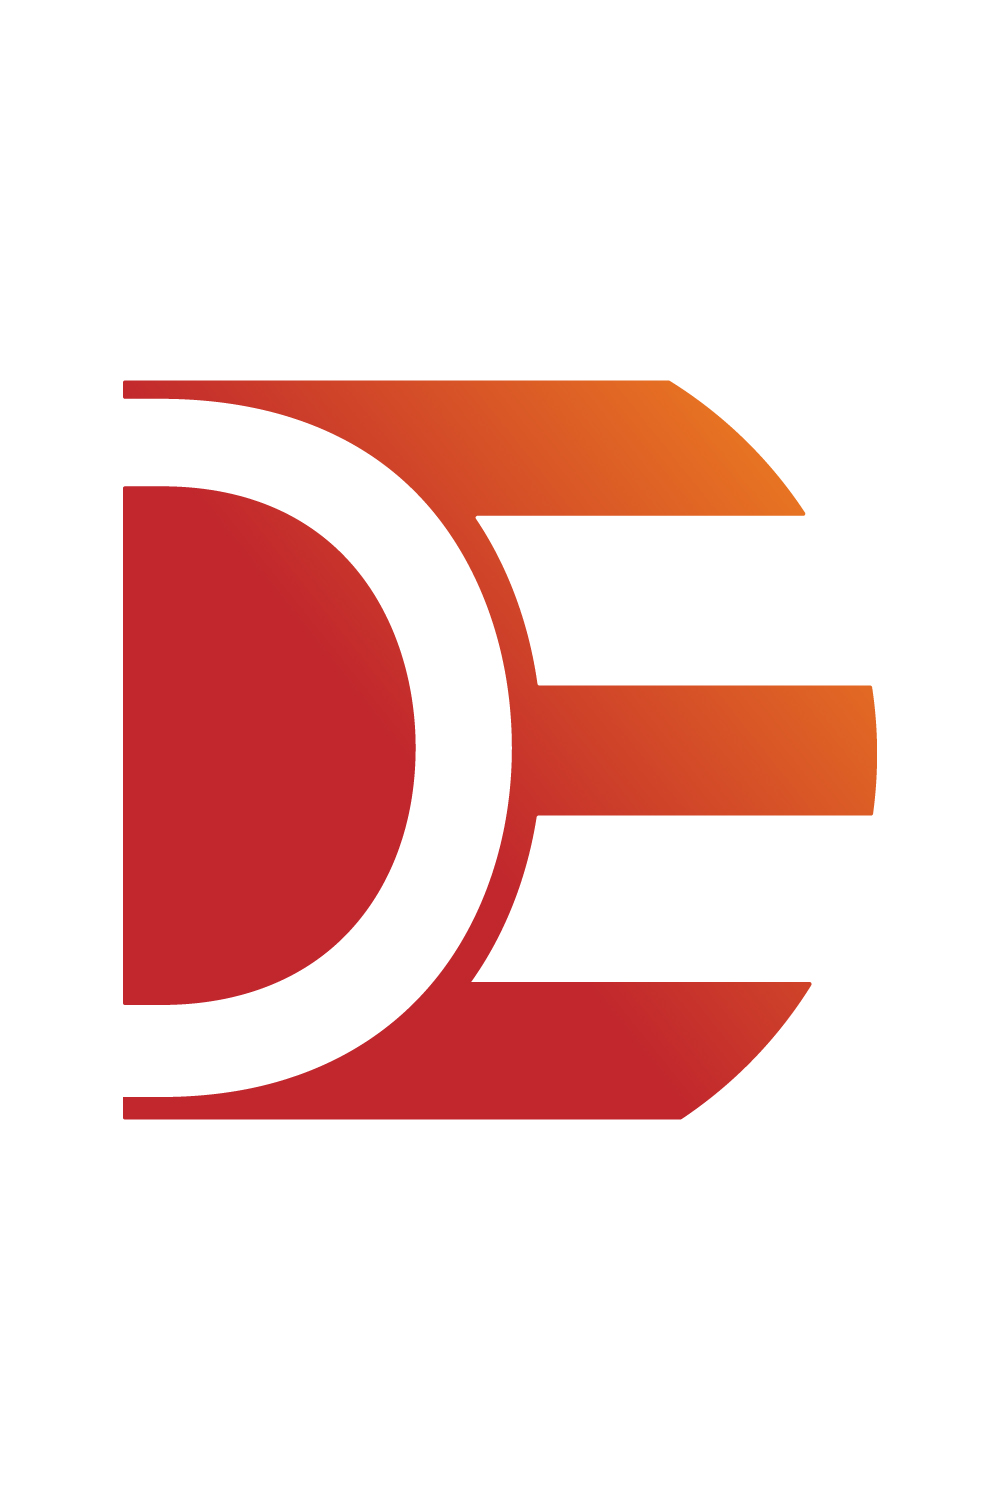 Professional DE letters logo design vector images ED logo orange and white color best company identity DE icon design pinterest preview image.